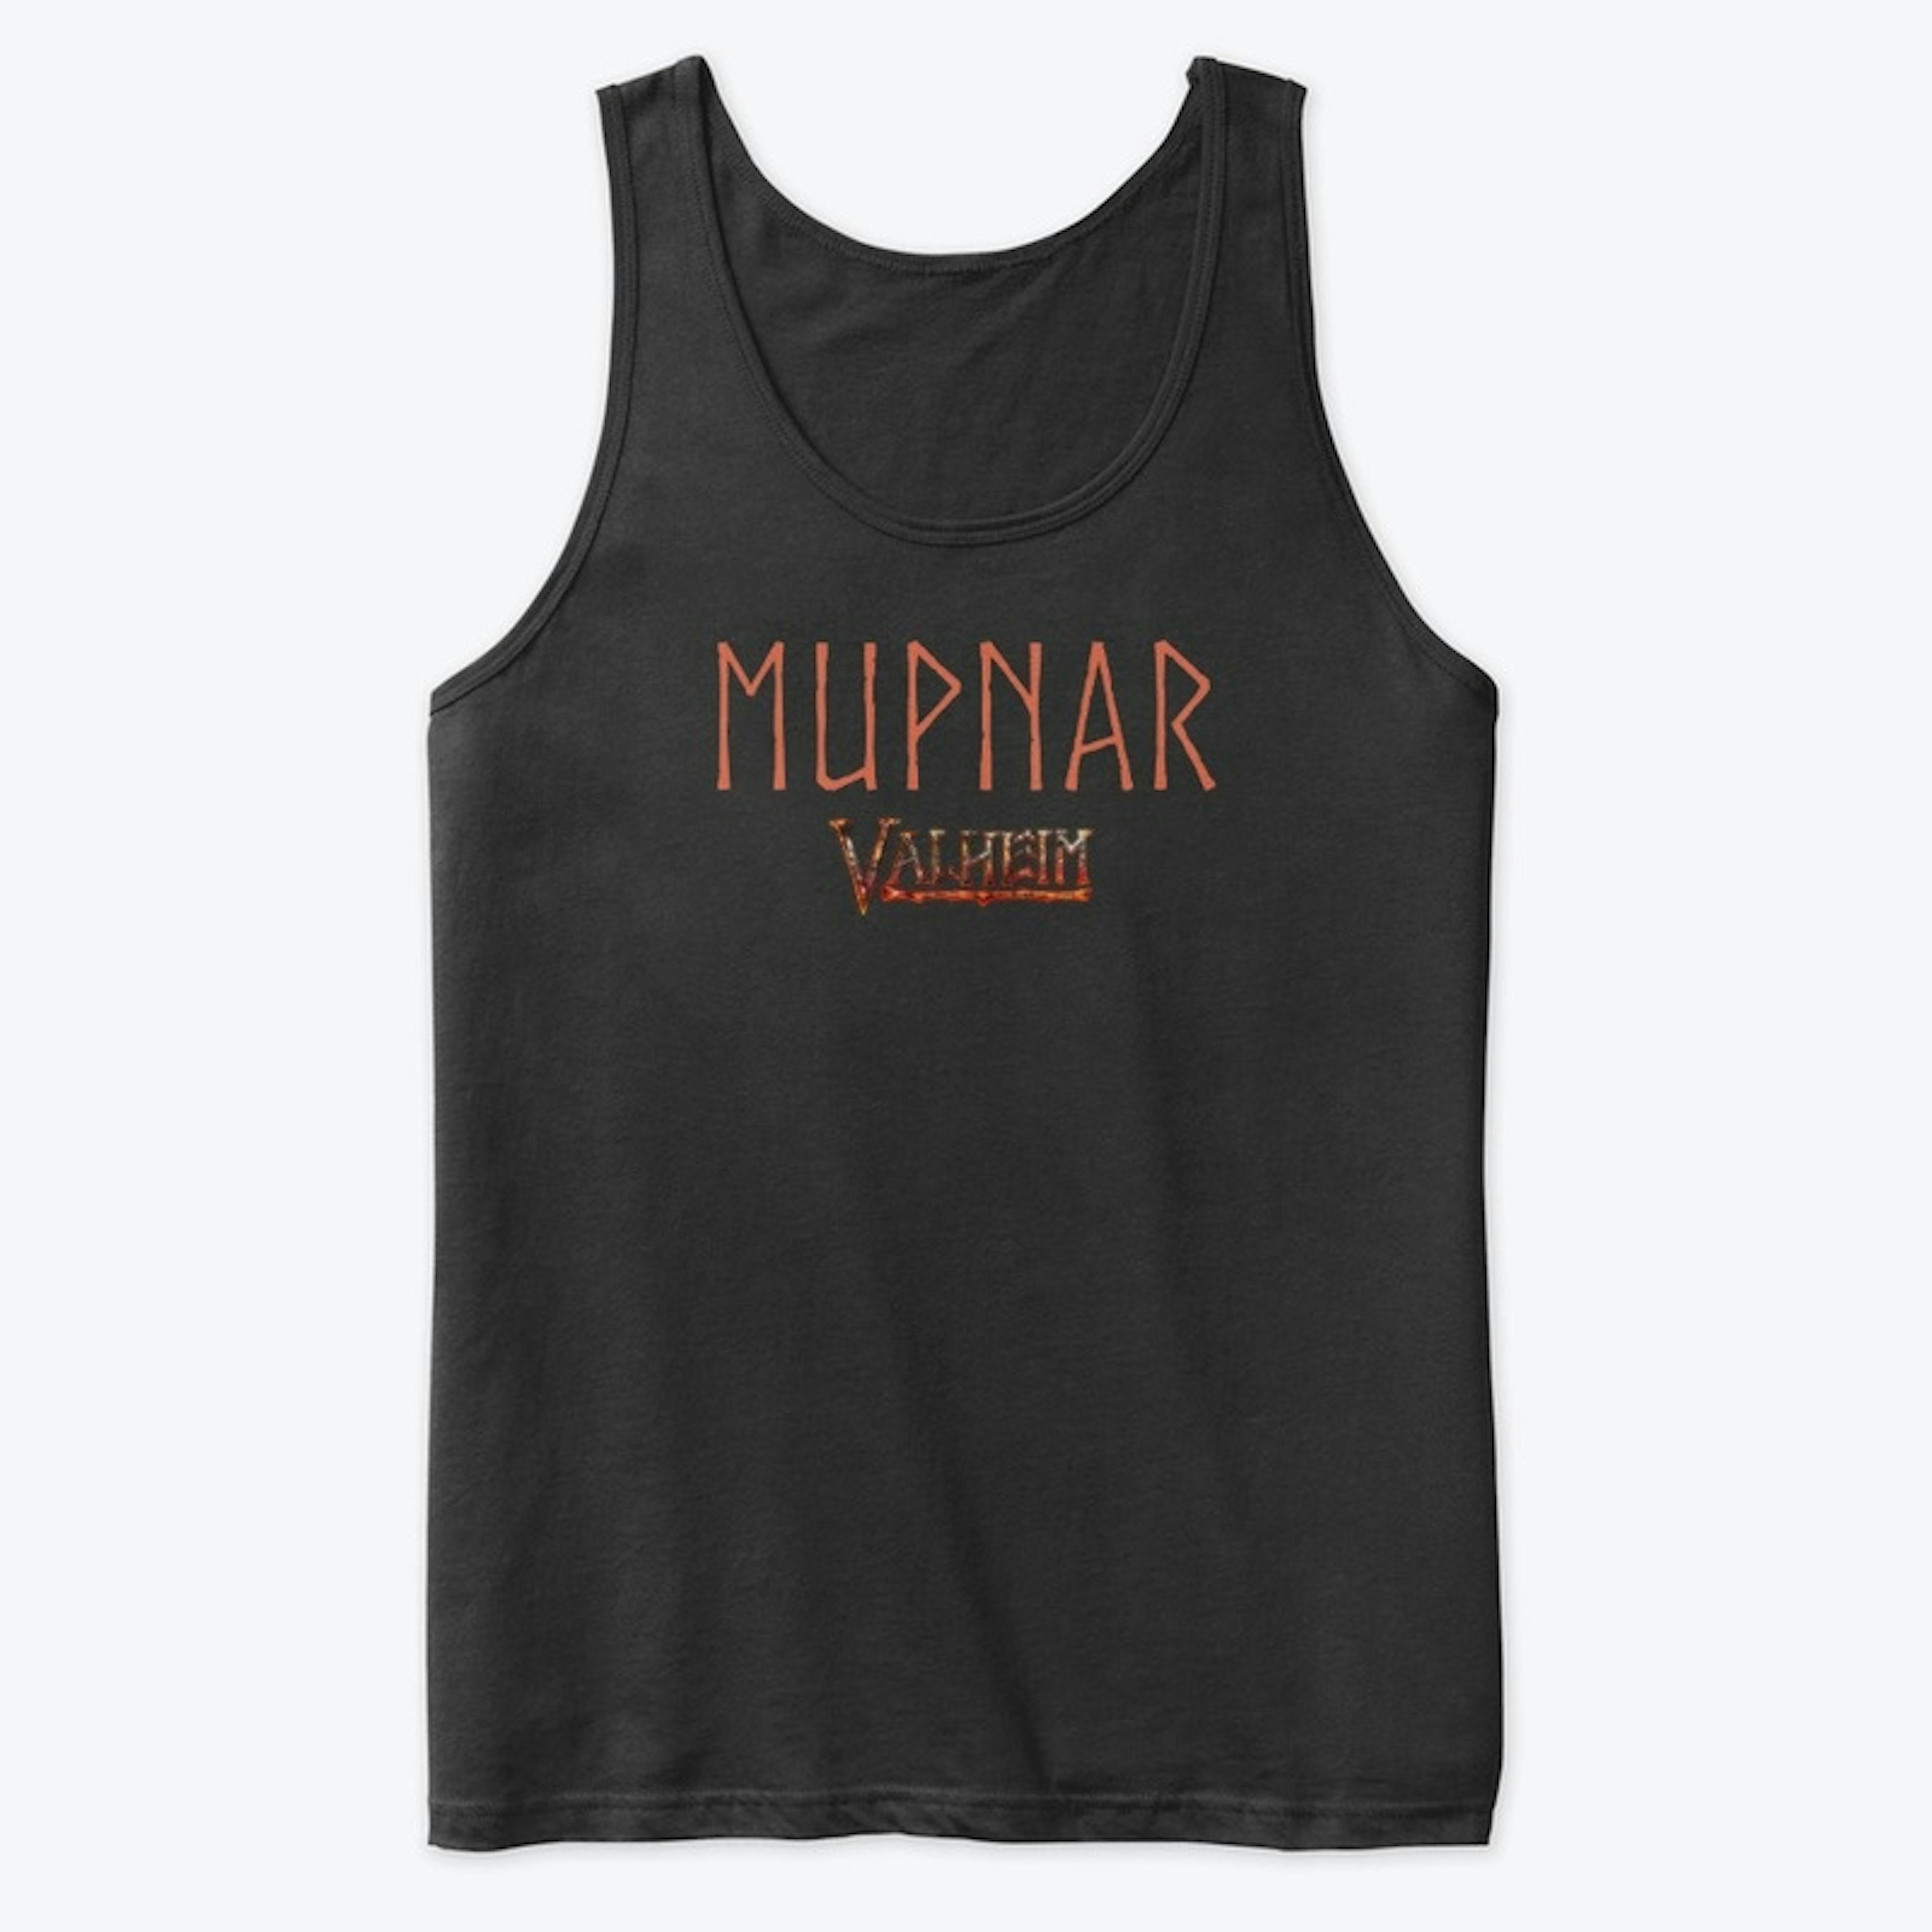 Mupnar Collection